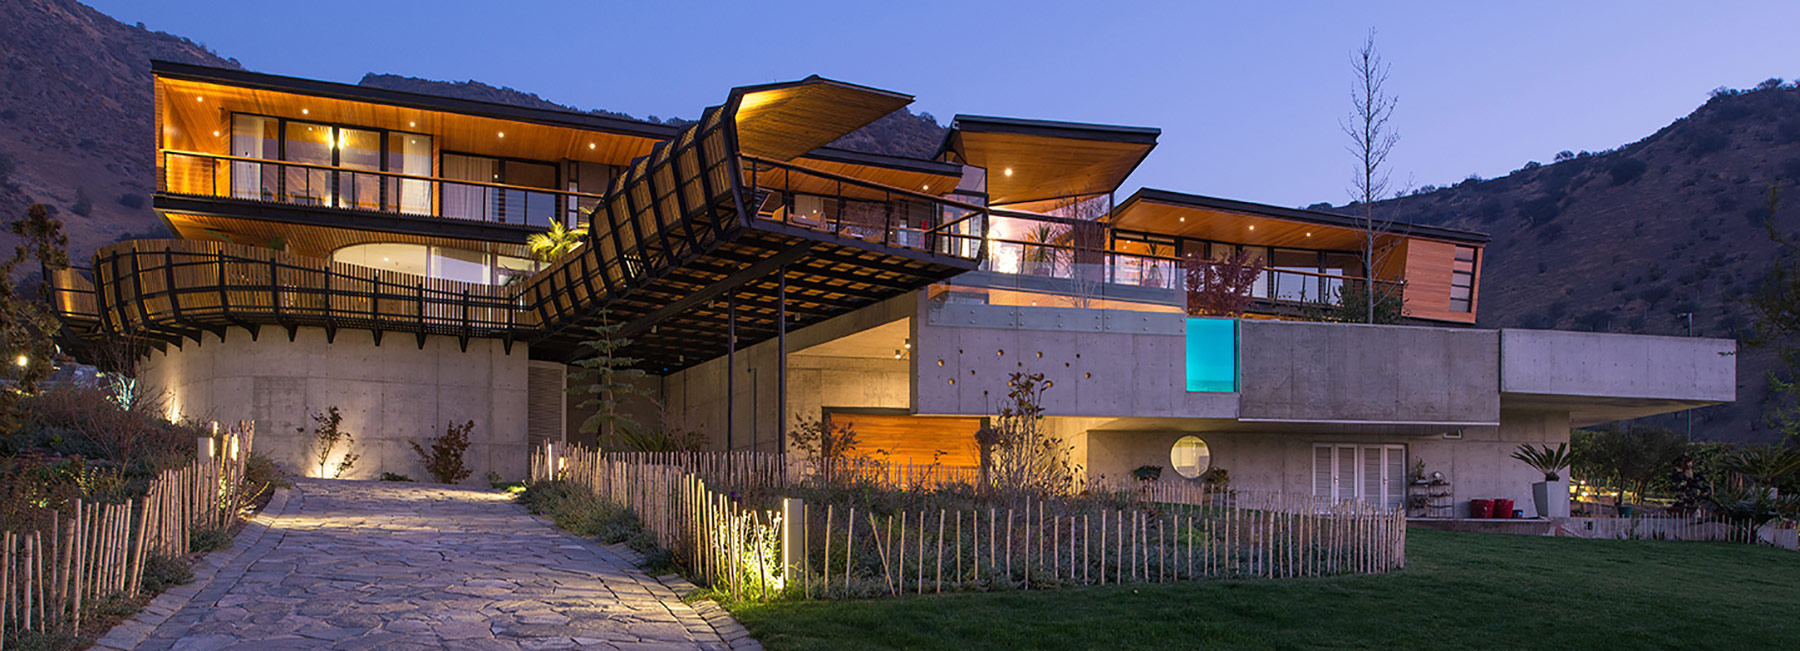 GITC arquitectura complete casa chamisero on chilean mountain range